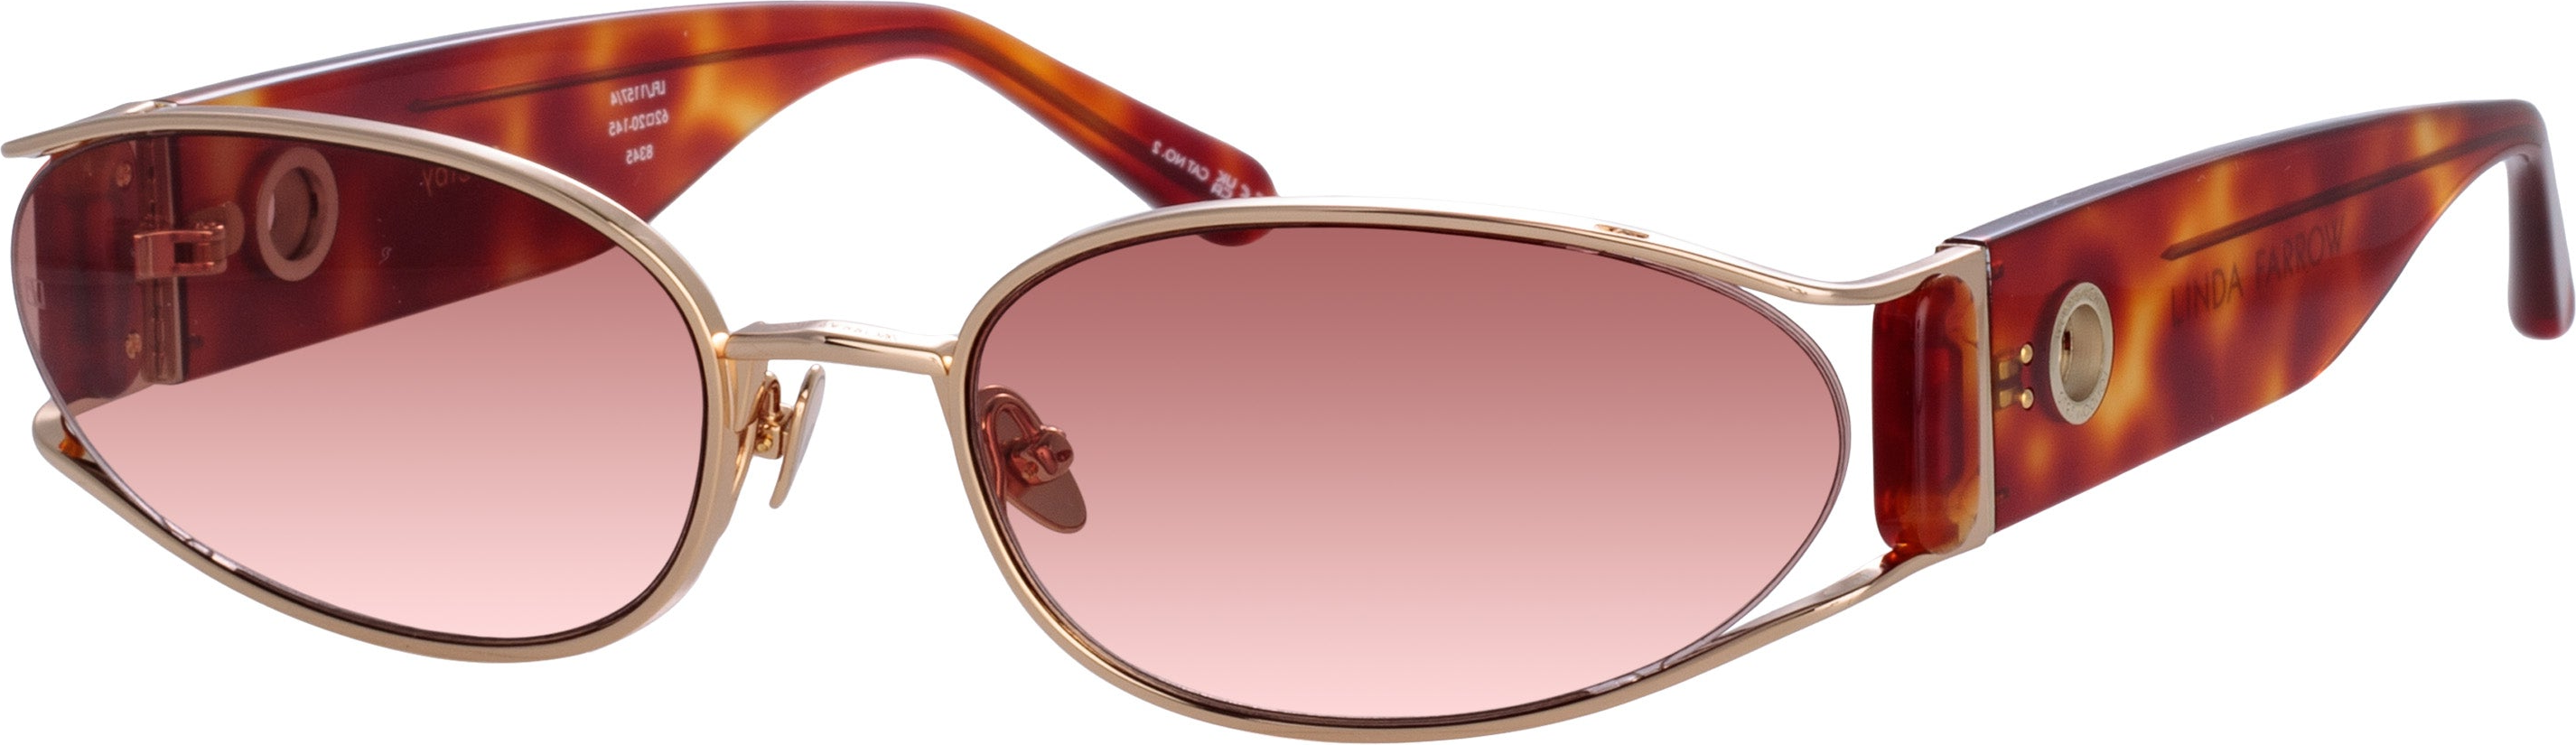 Color_LFL1157C4SUN - Shelby Cat Eye Sunglasses in Amber Tortoiseshell